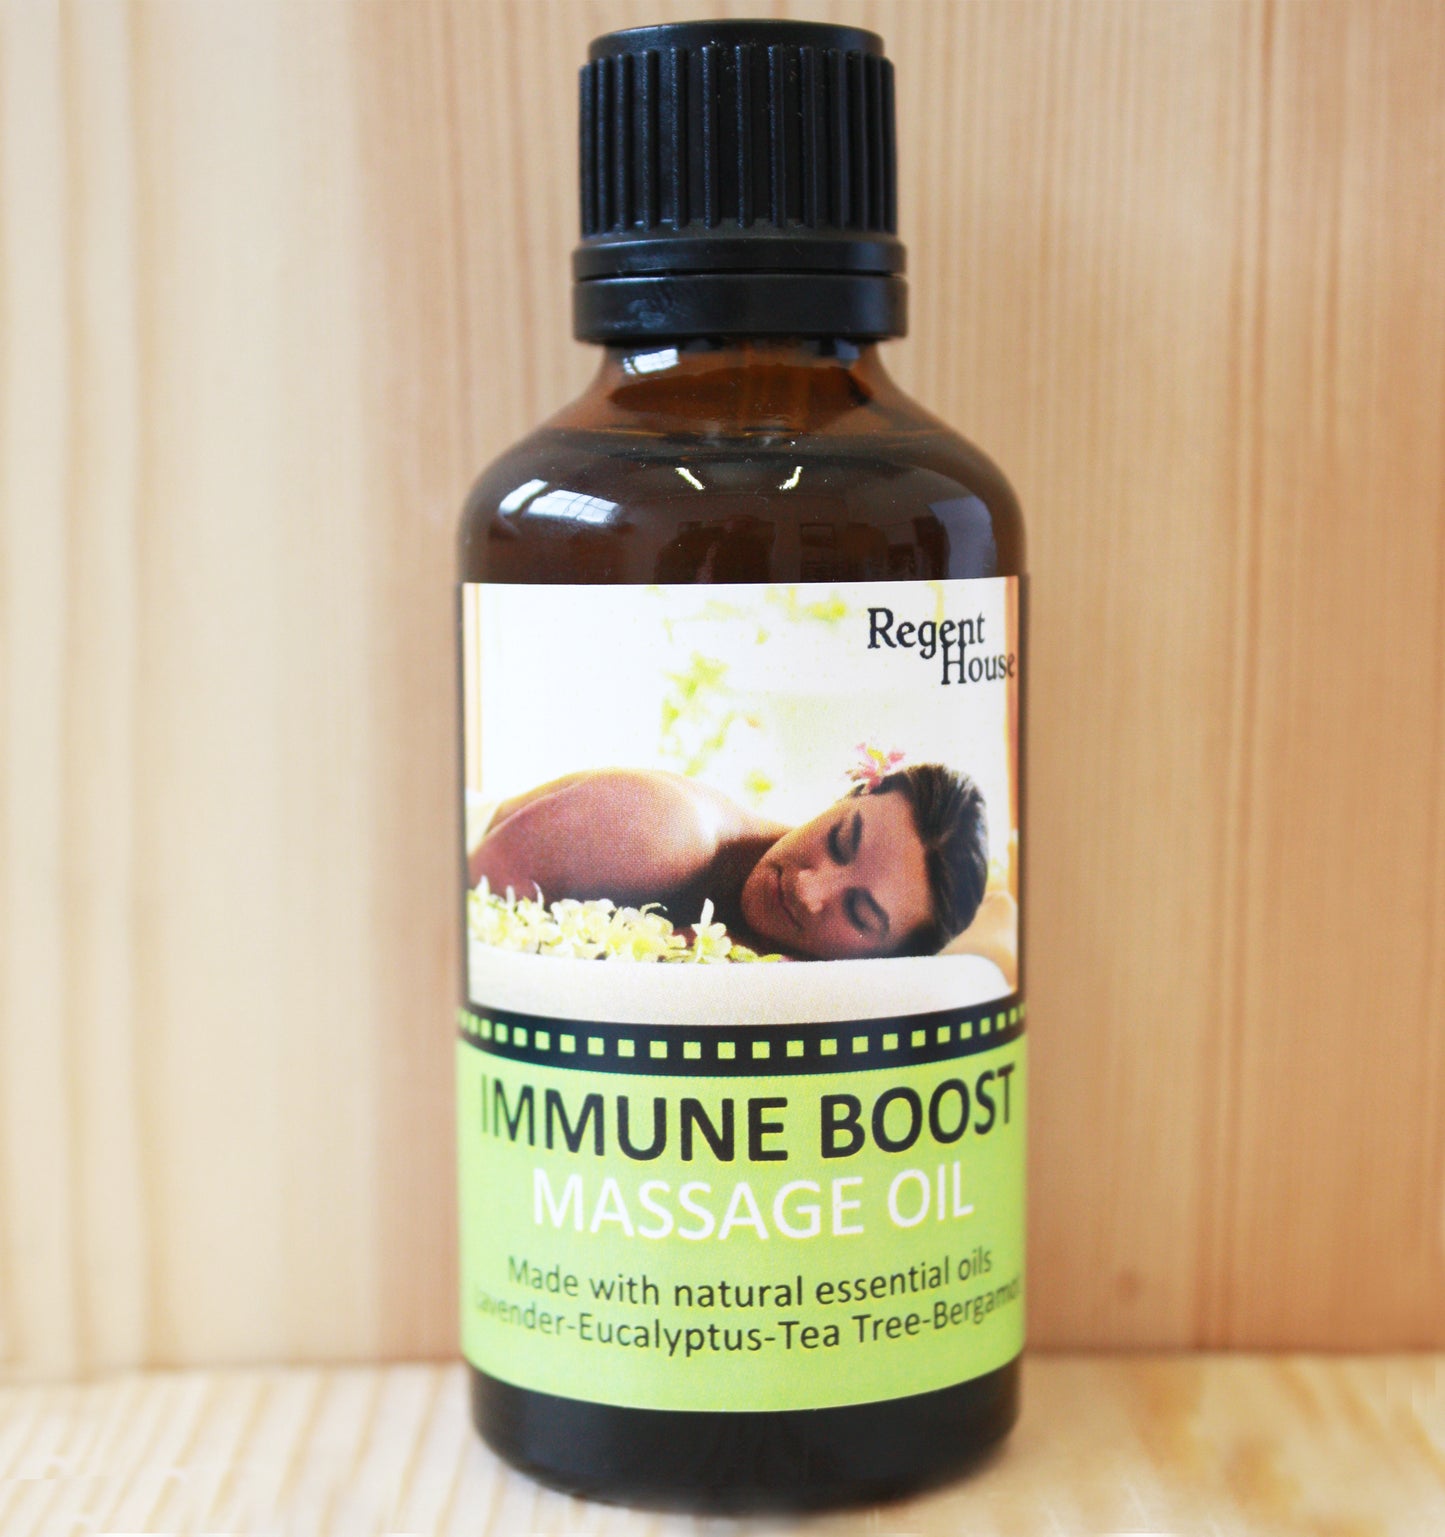 Immune Boost Massage Oil